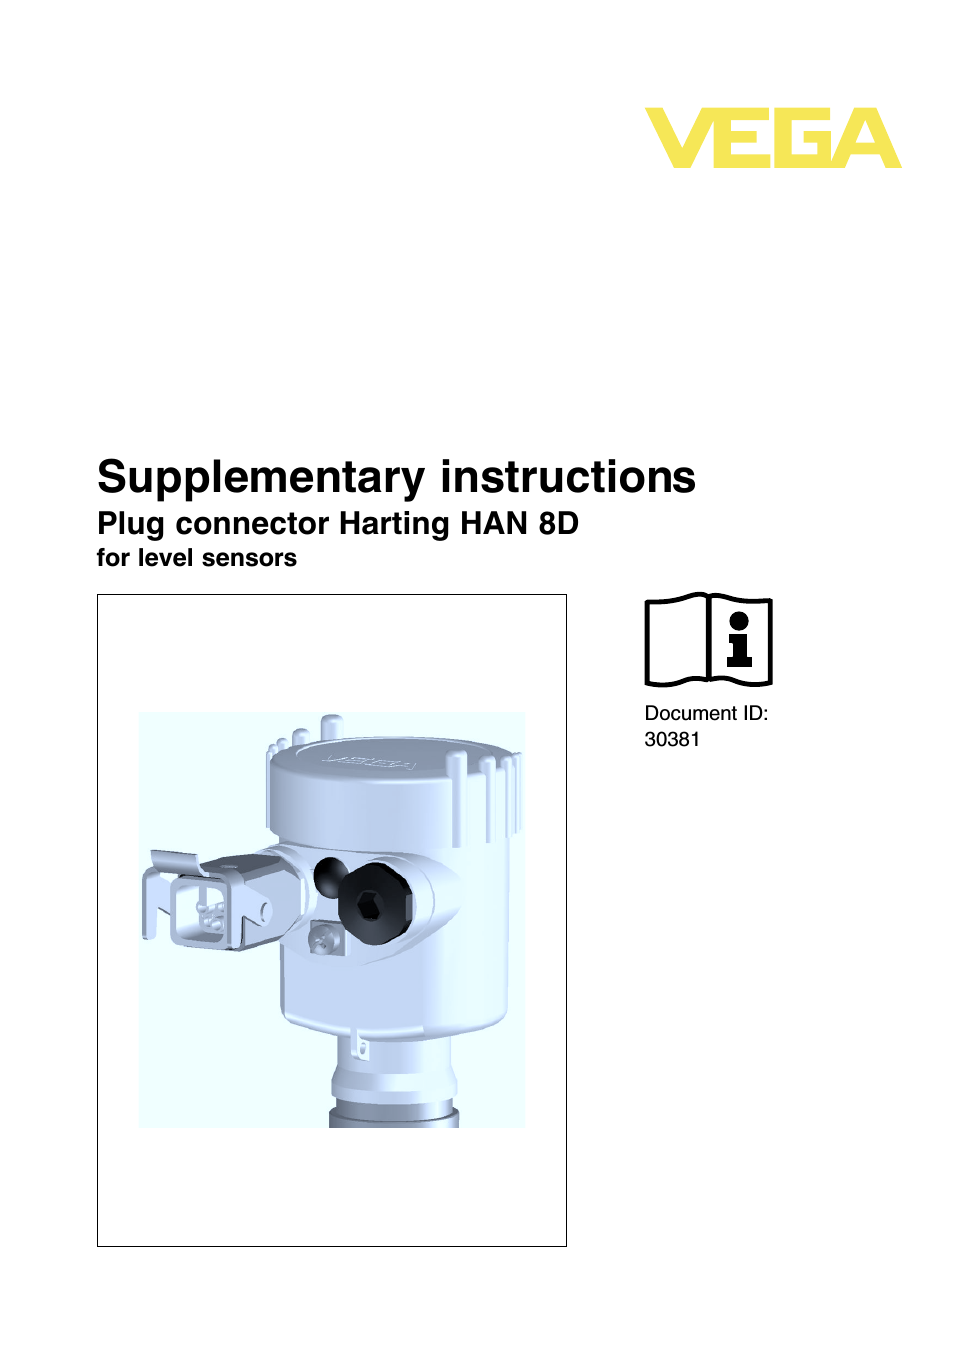 Plug connector Harting HAN 8D for level sensors